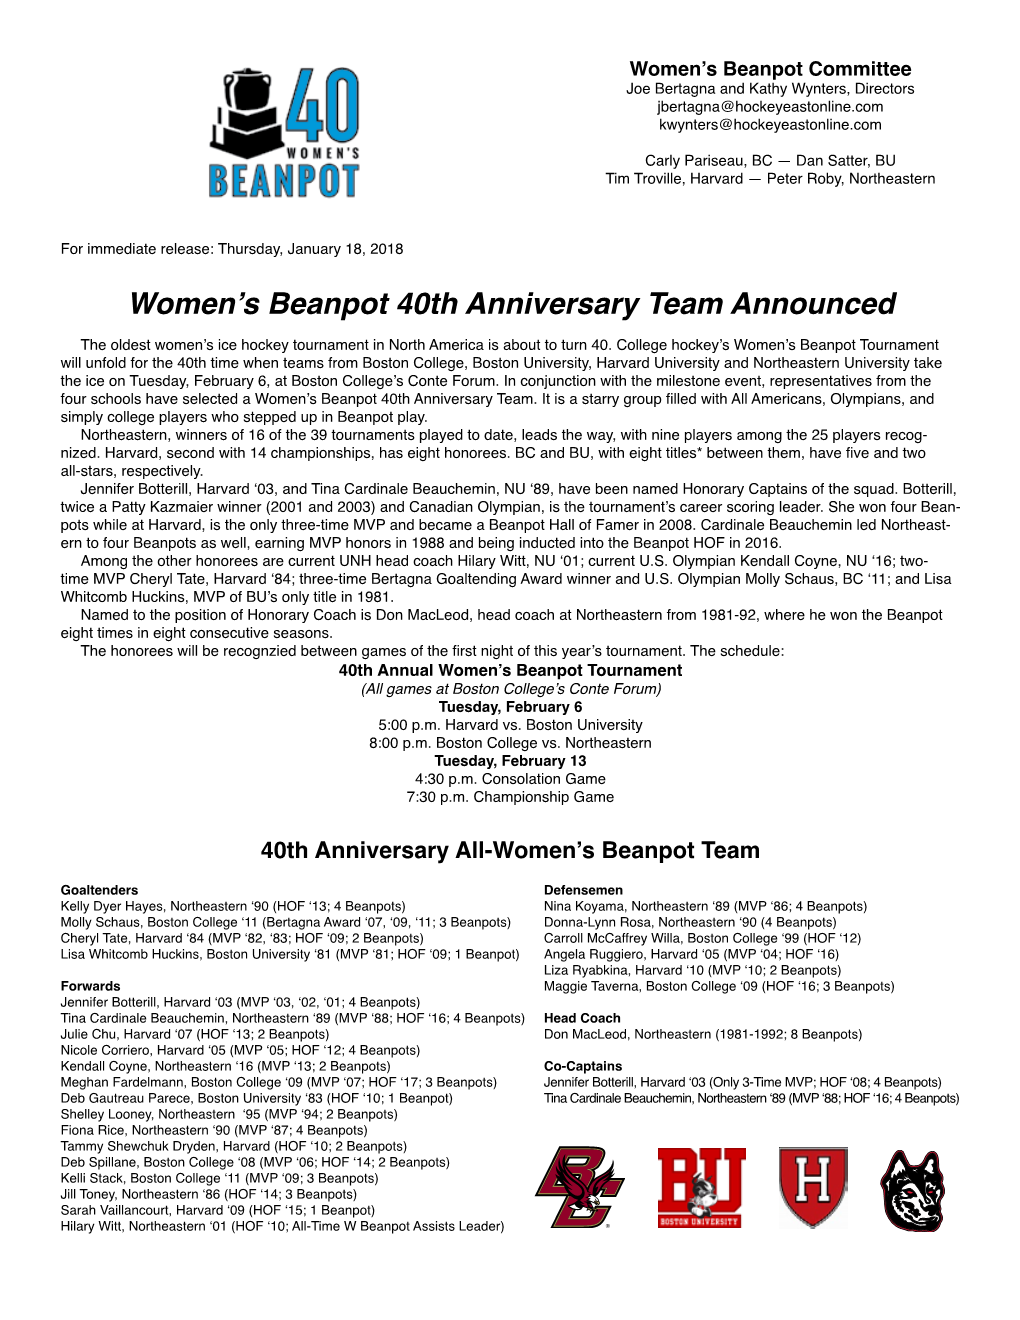 Women's Beanpot 40Th Anniversary Team Announced